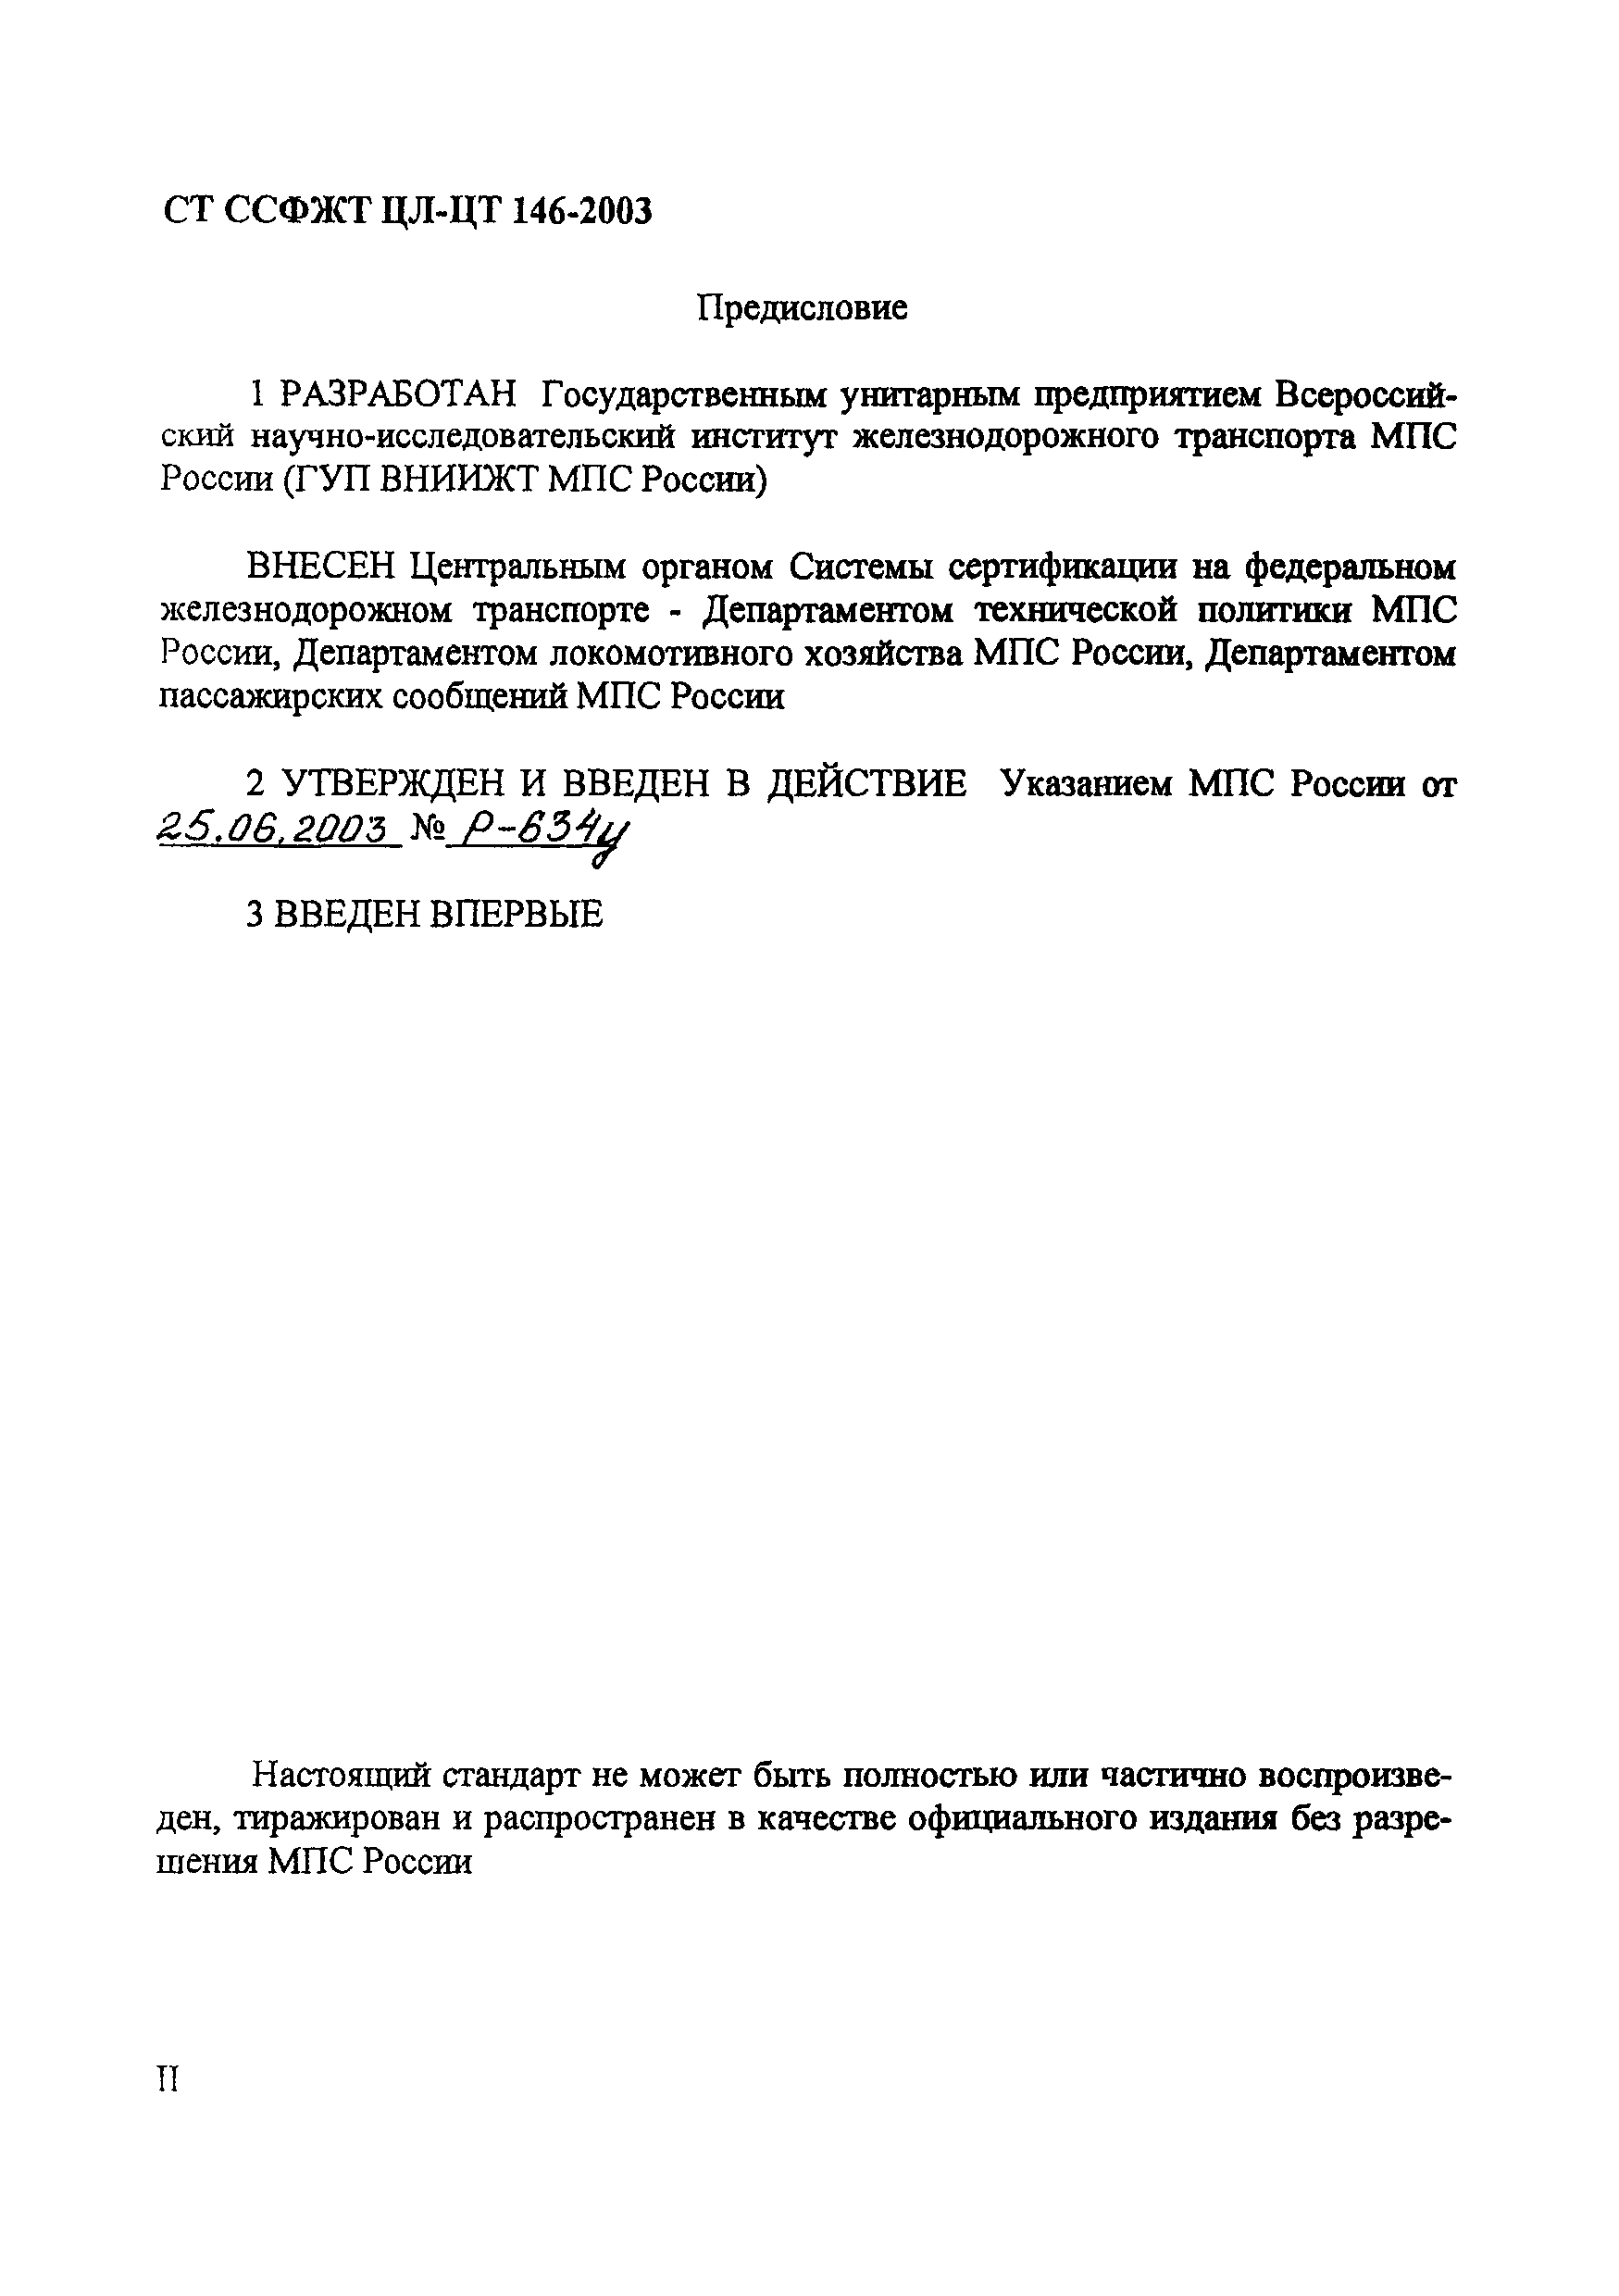 СТ ССФЖТ ЦЛ-ЦТ 146-2003